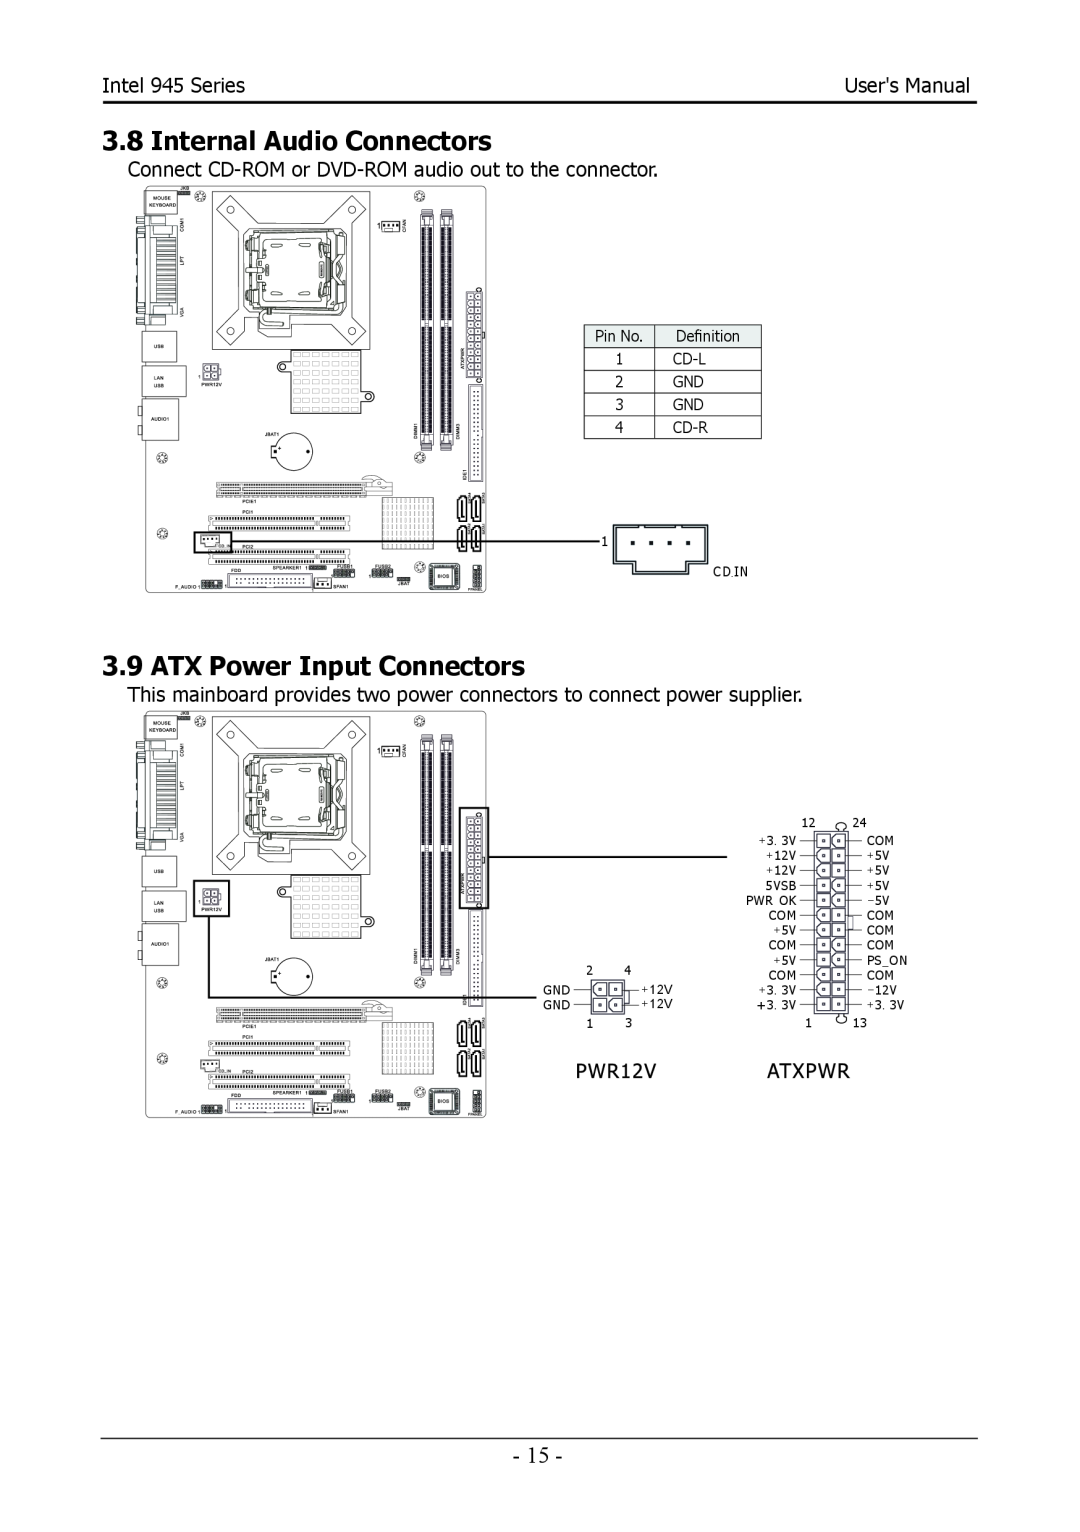 Intel 945GZT, 945GCT user manual Internal Audio Connectors, ATX Power Input Connectors, Cdin 